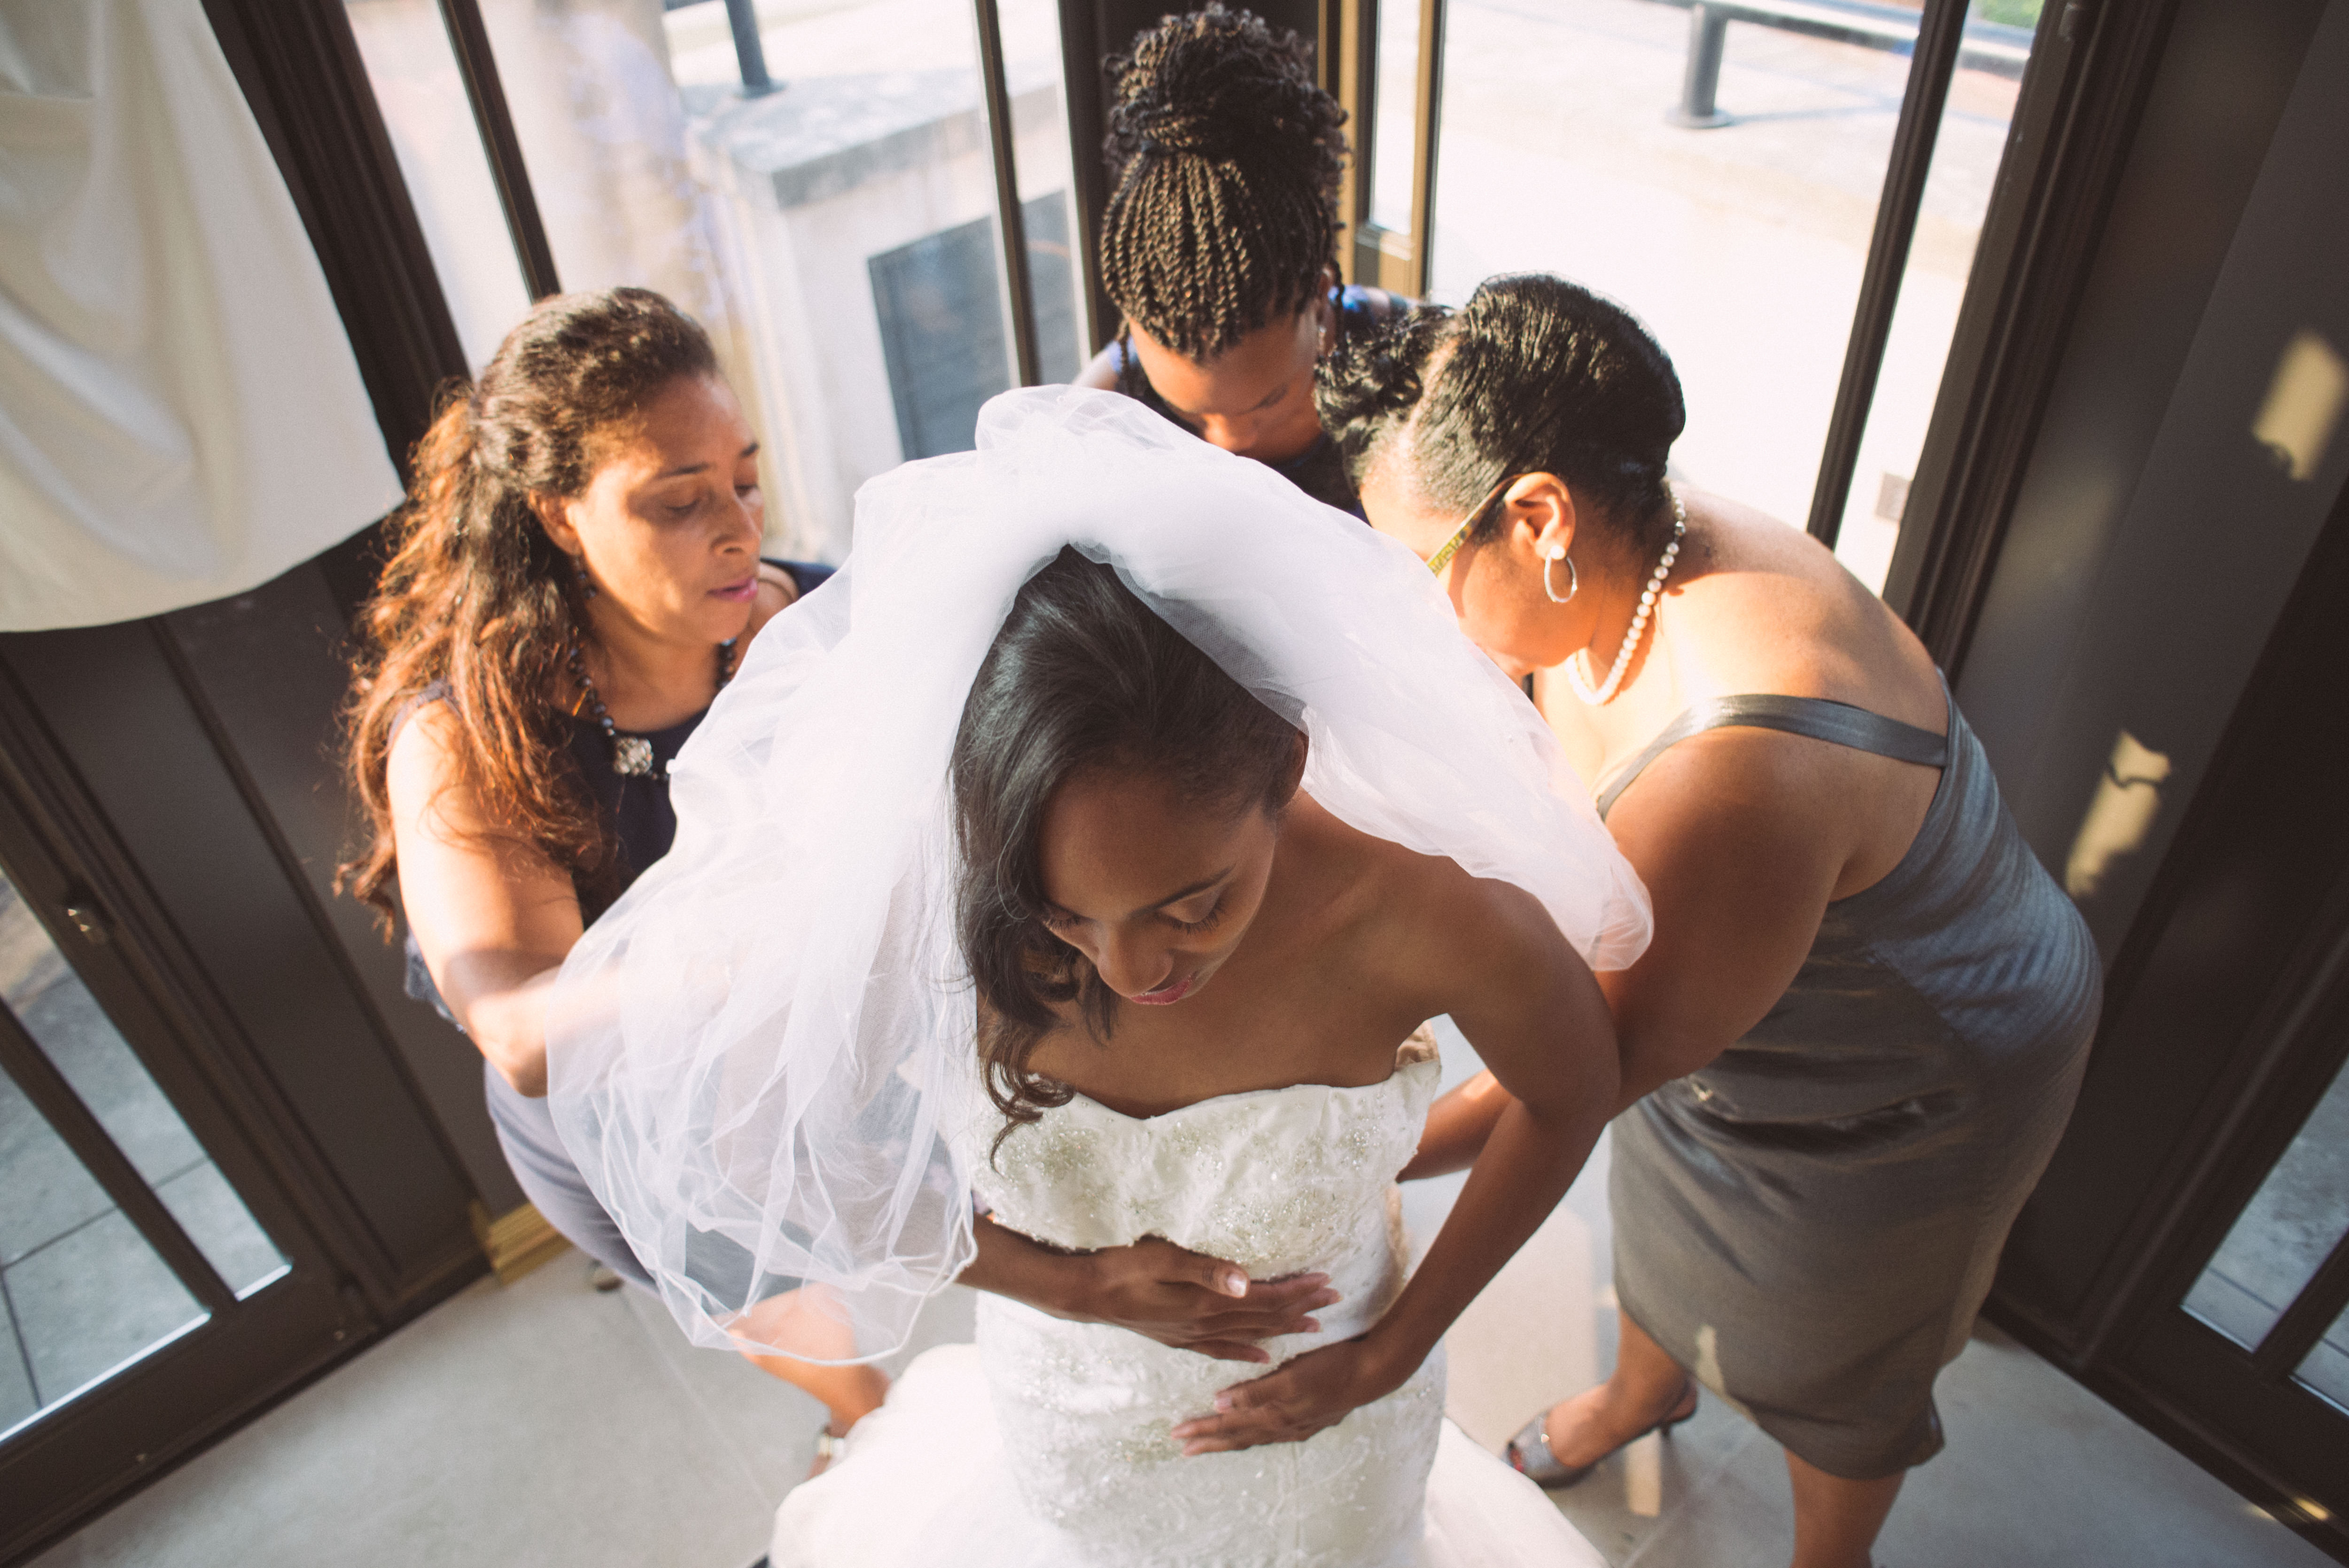 A bride is helped by her ladies